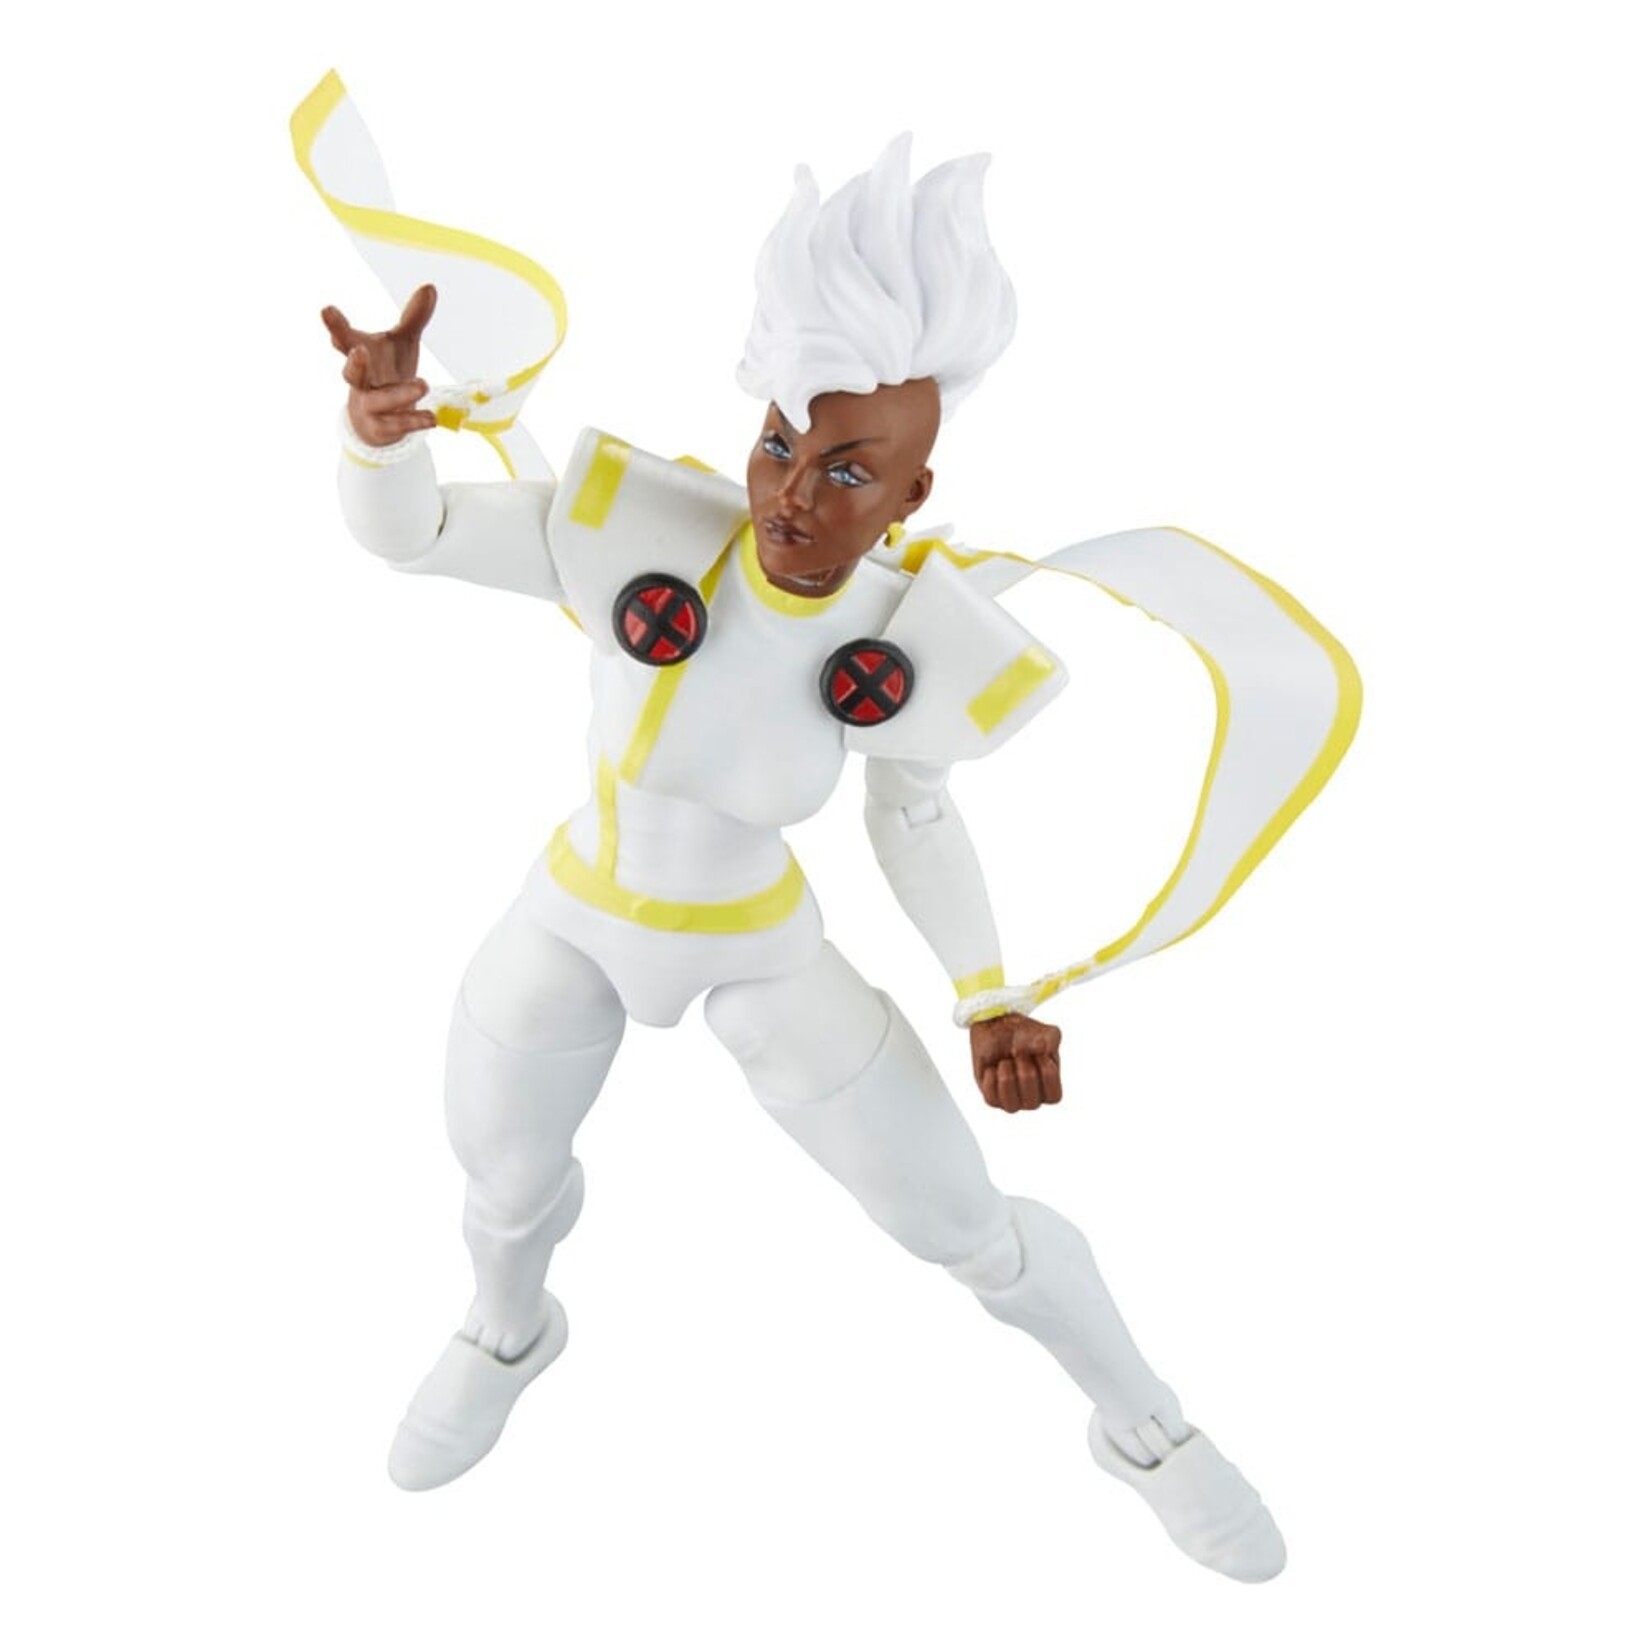 Hasbro Hasbro Marvel X-Men '97 Action Figure Storm 15 cm